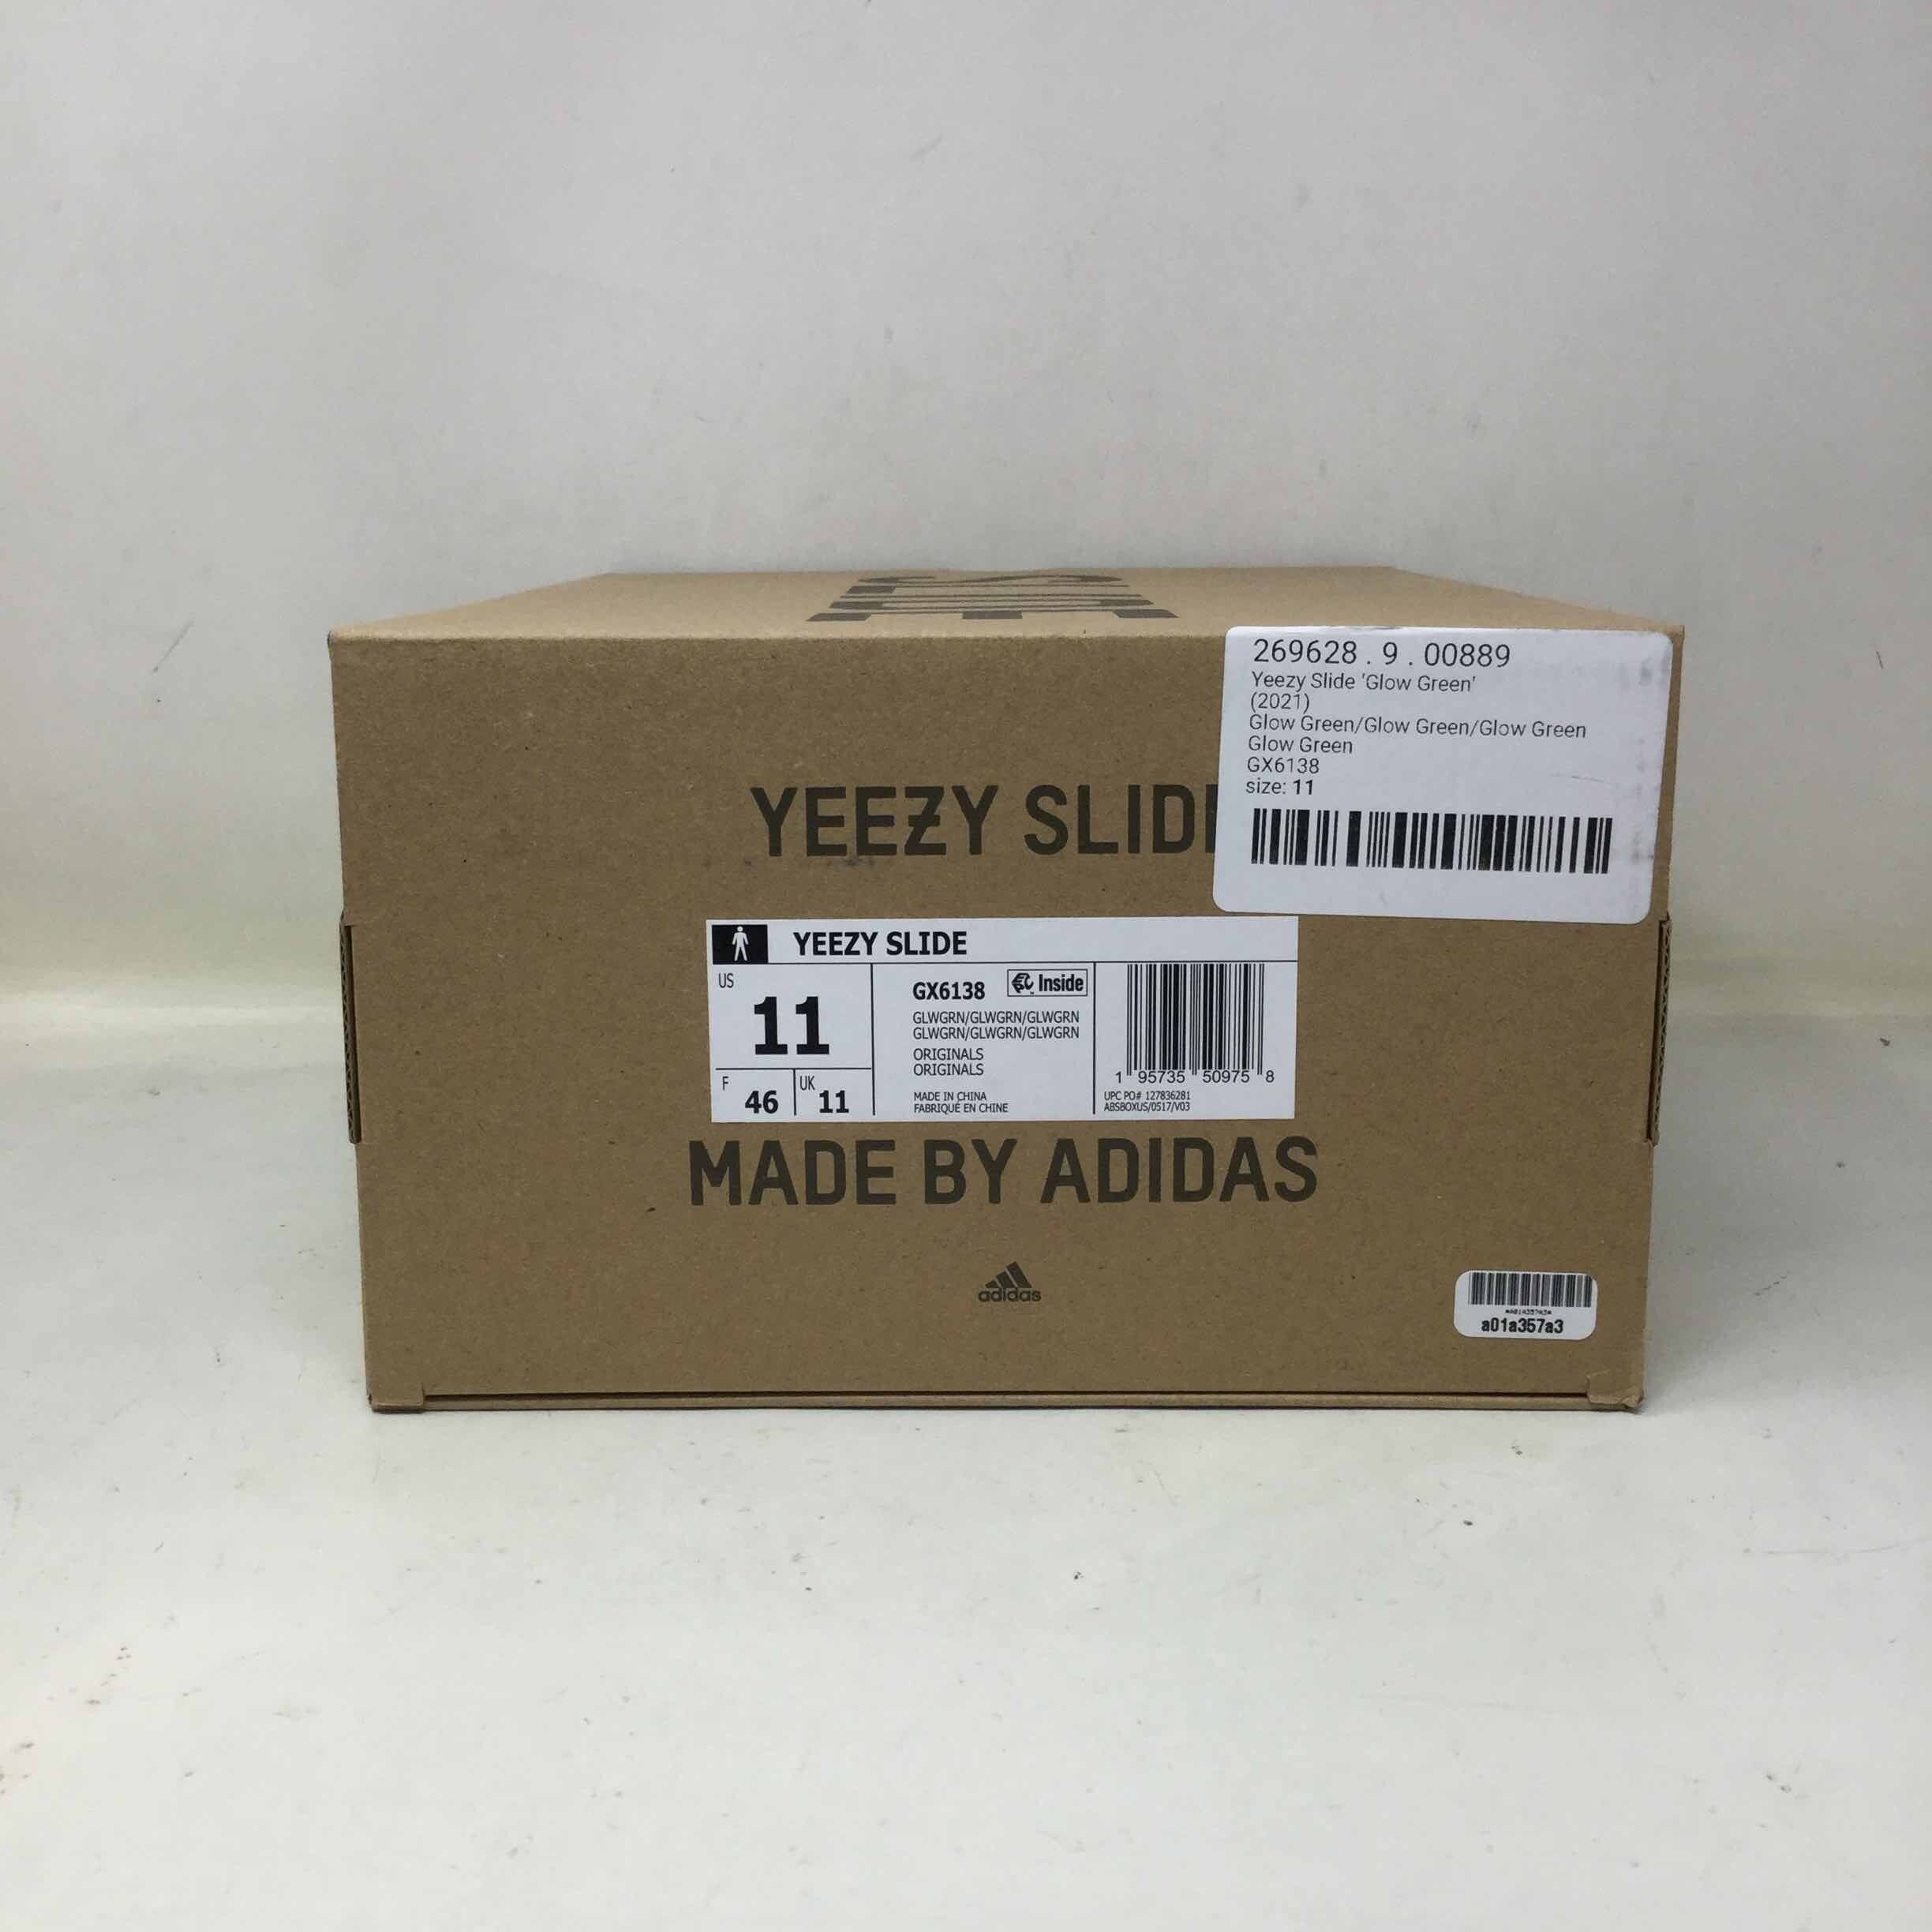 Adidas Yeezy Slides Glow Green Size US 11 / EU 44 - 7 Preview